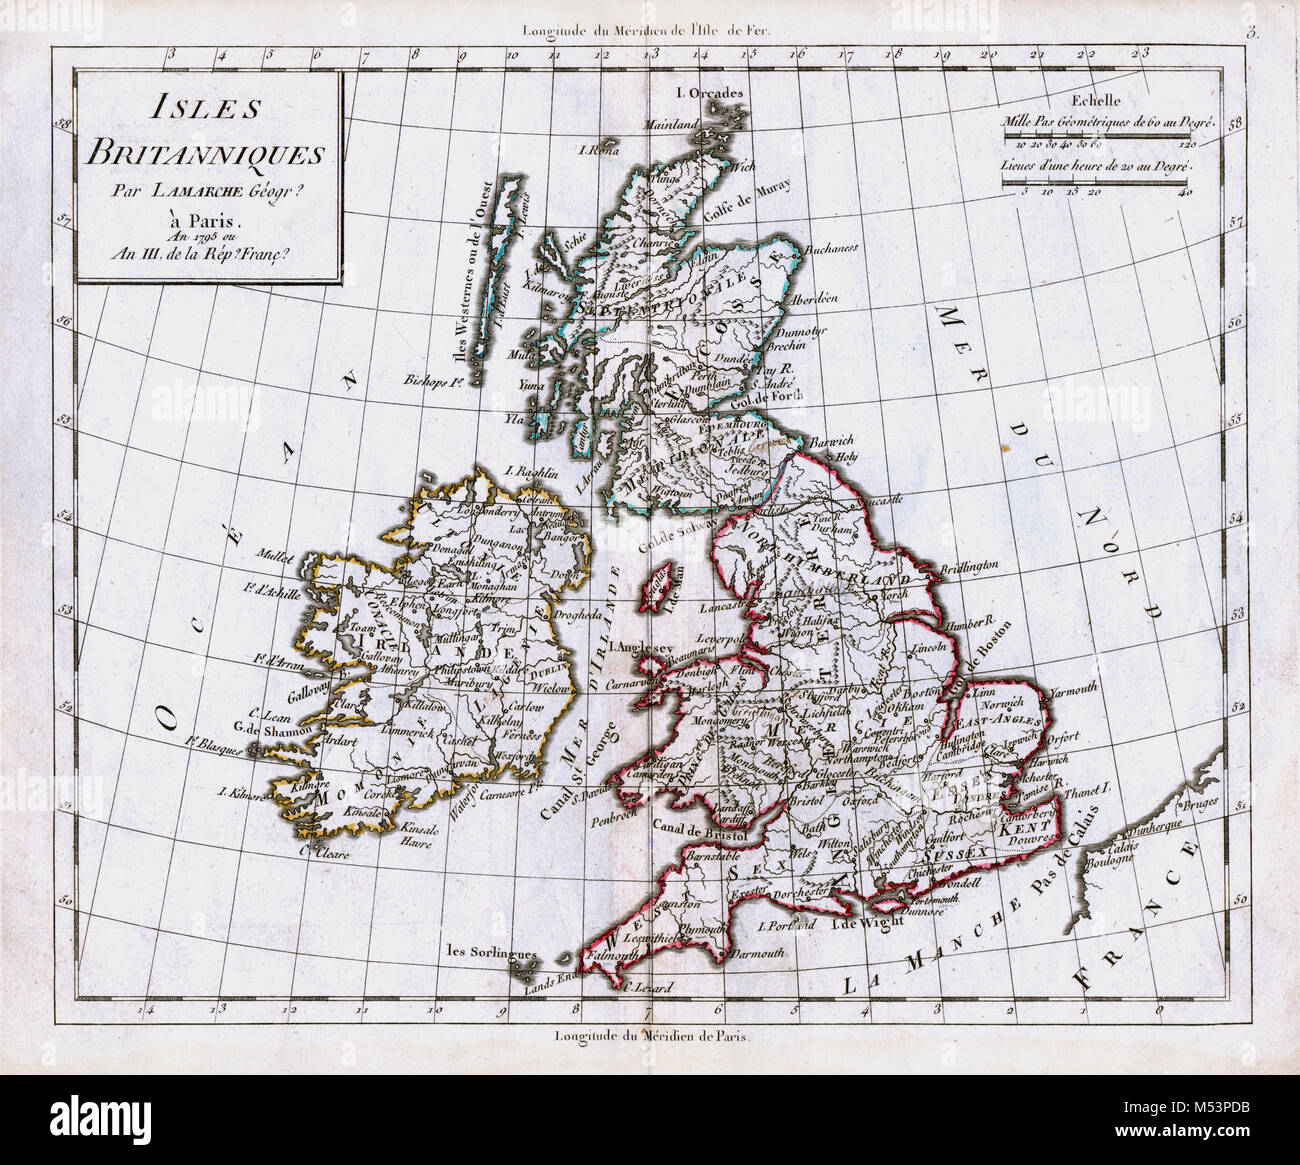 1830 Delamarche Atlas Map - British Isles - Great Britain & Ireland -  Scotland England Wales London Stock Photo - Alamy